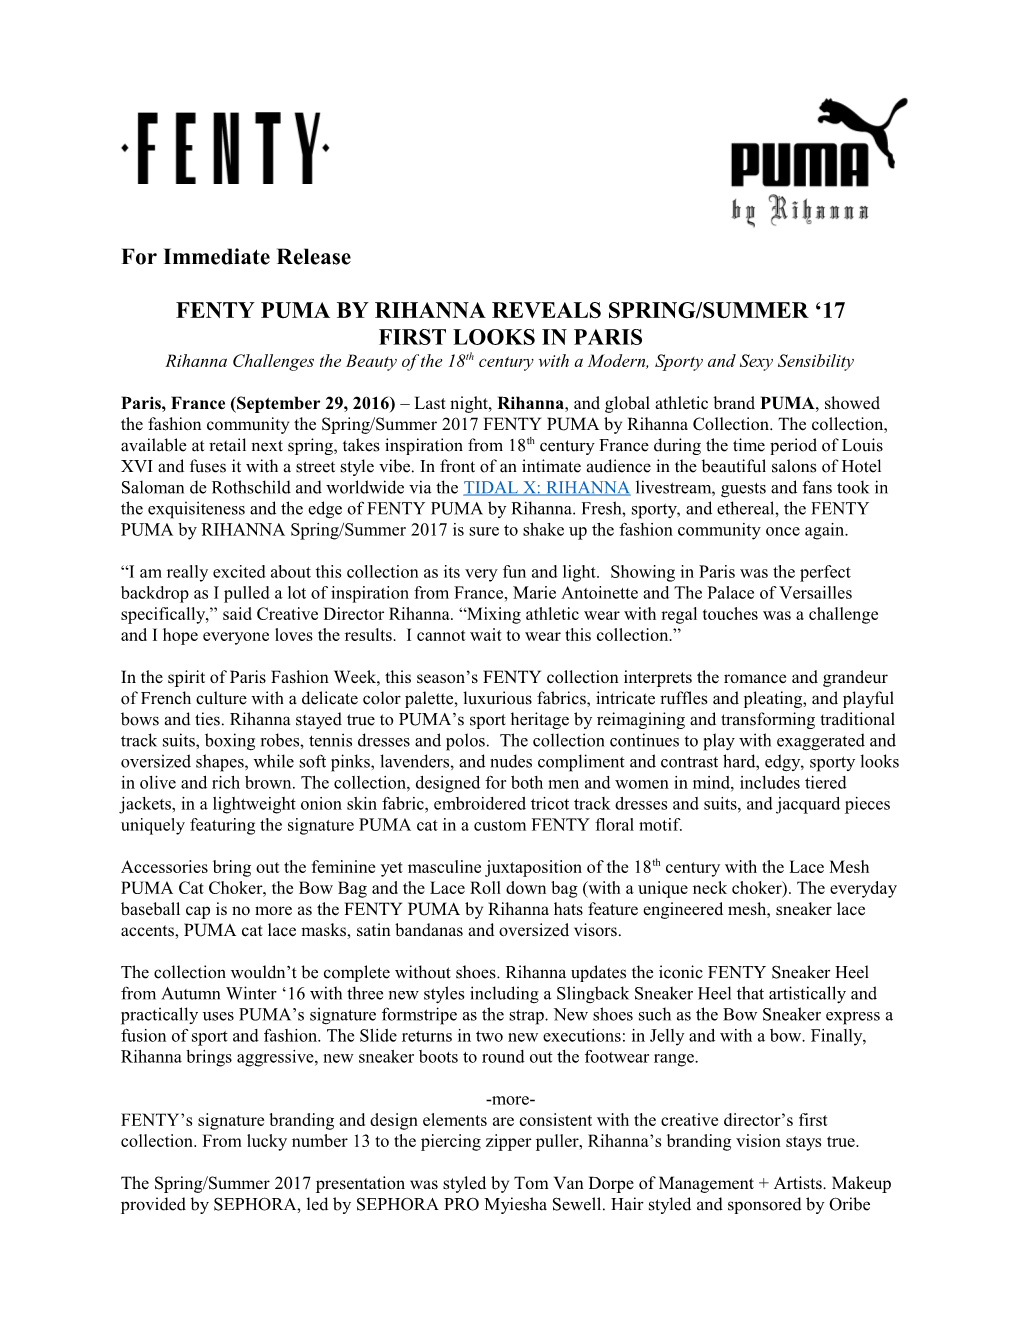 Fenty Puma by Rihanna Reveals Spring/Summer 17